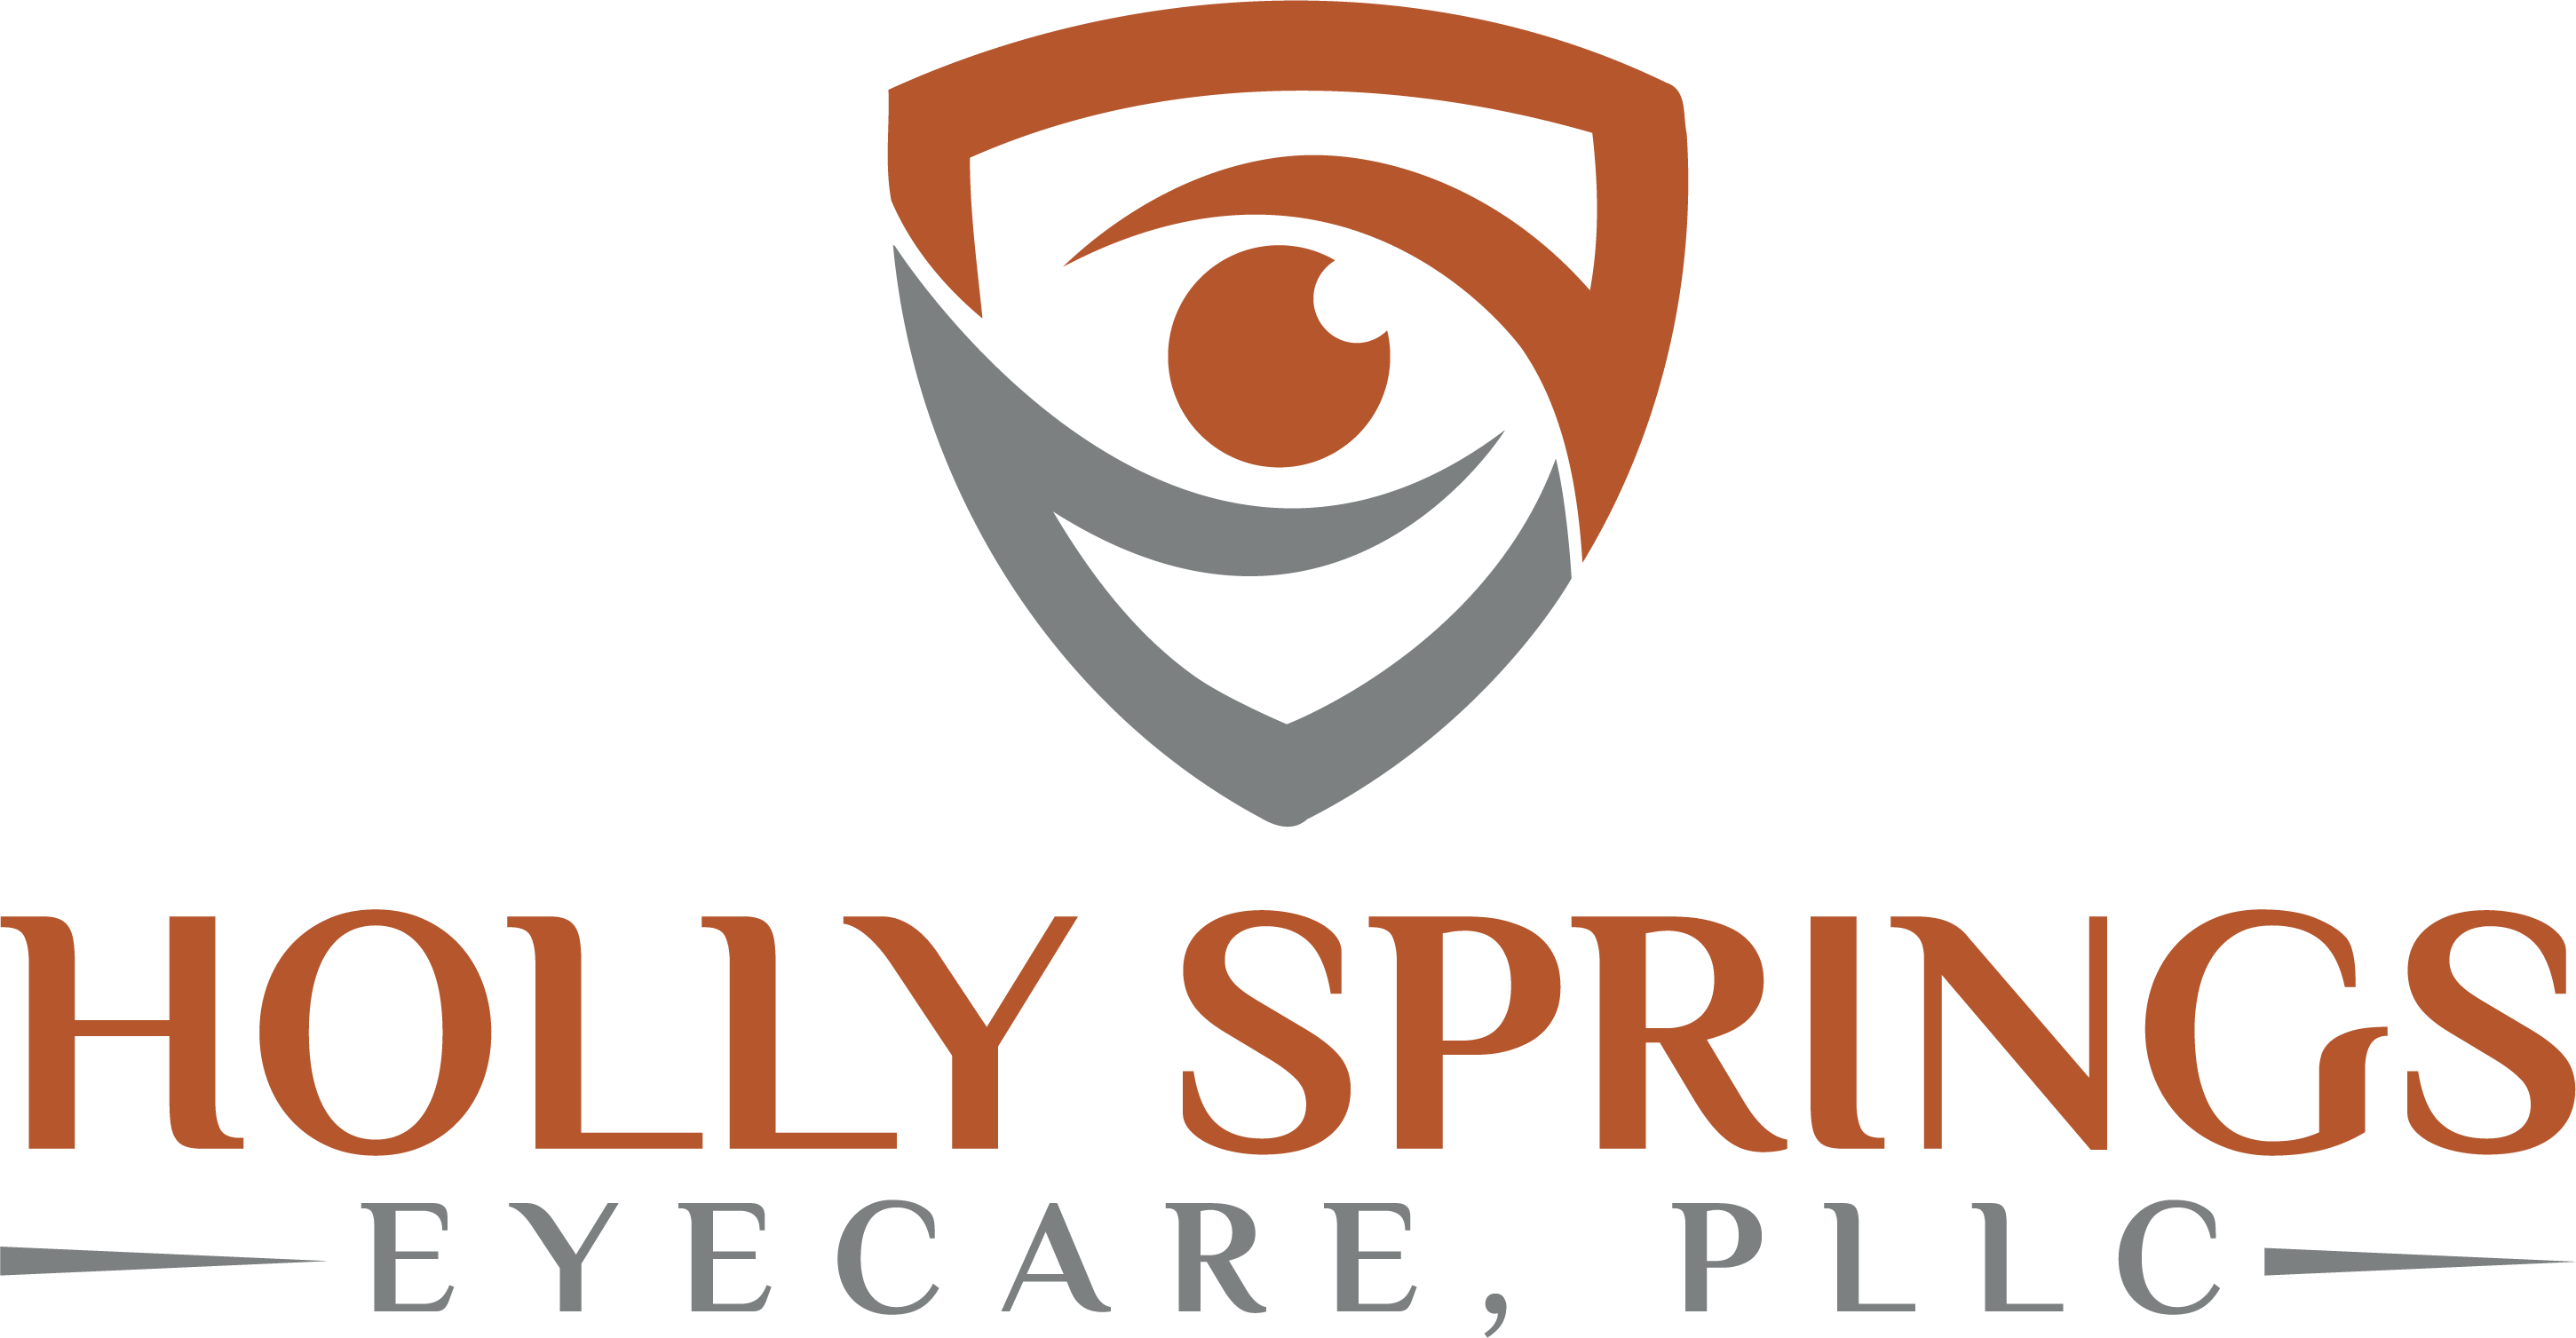 Holly Springs Eyecare PLLC